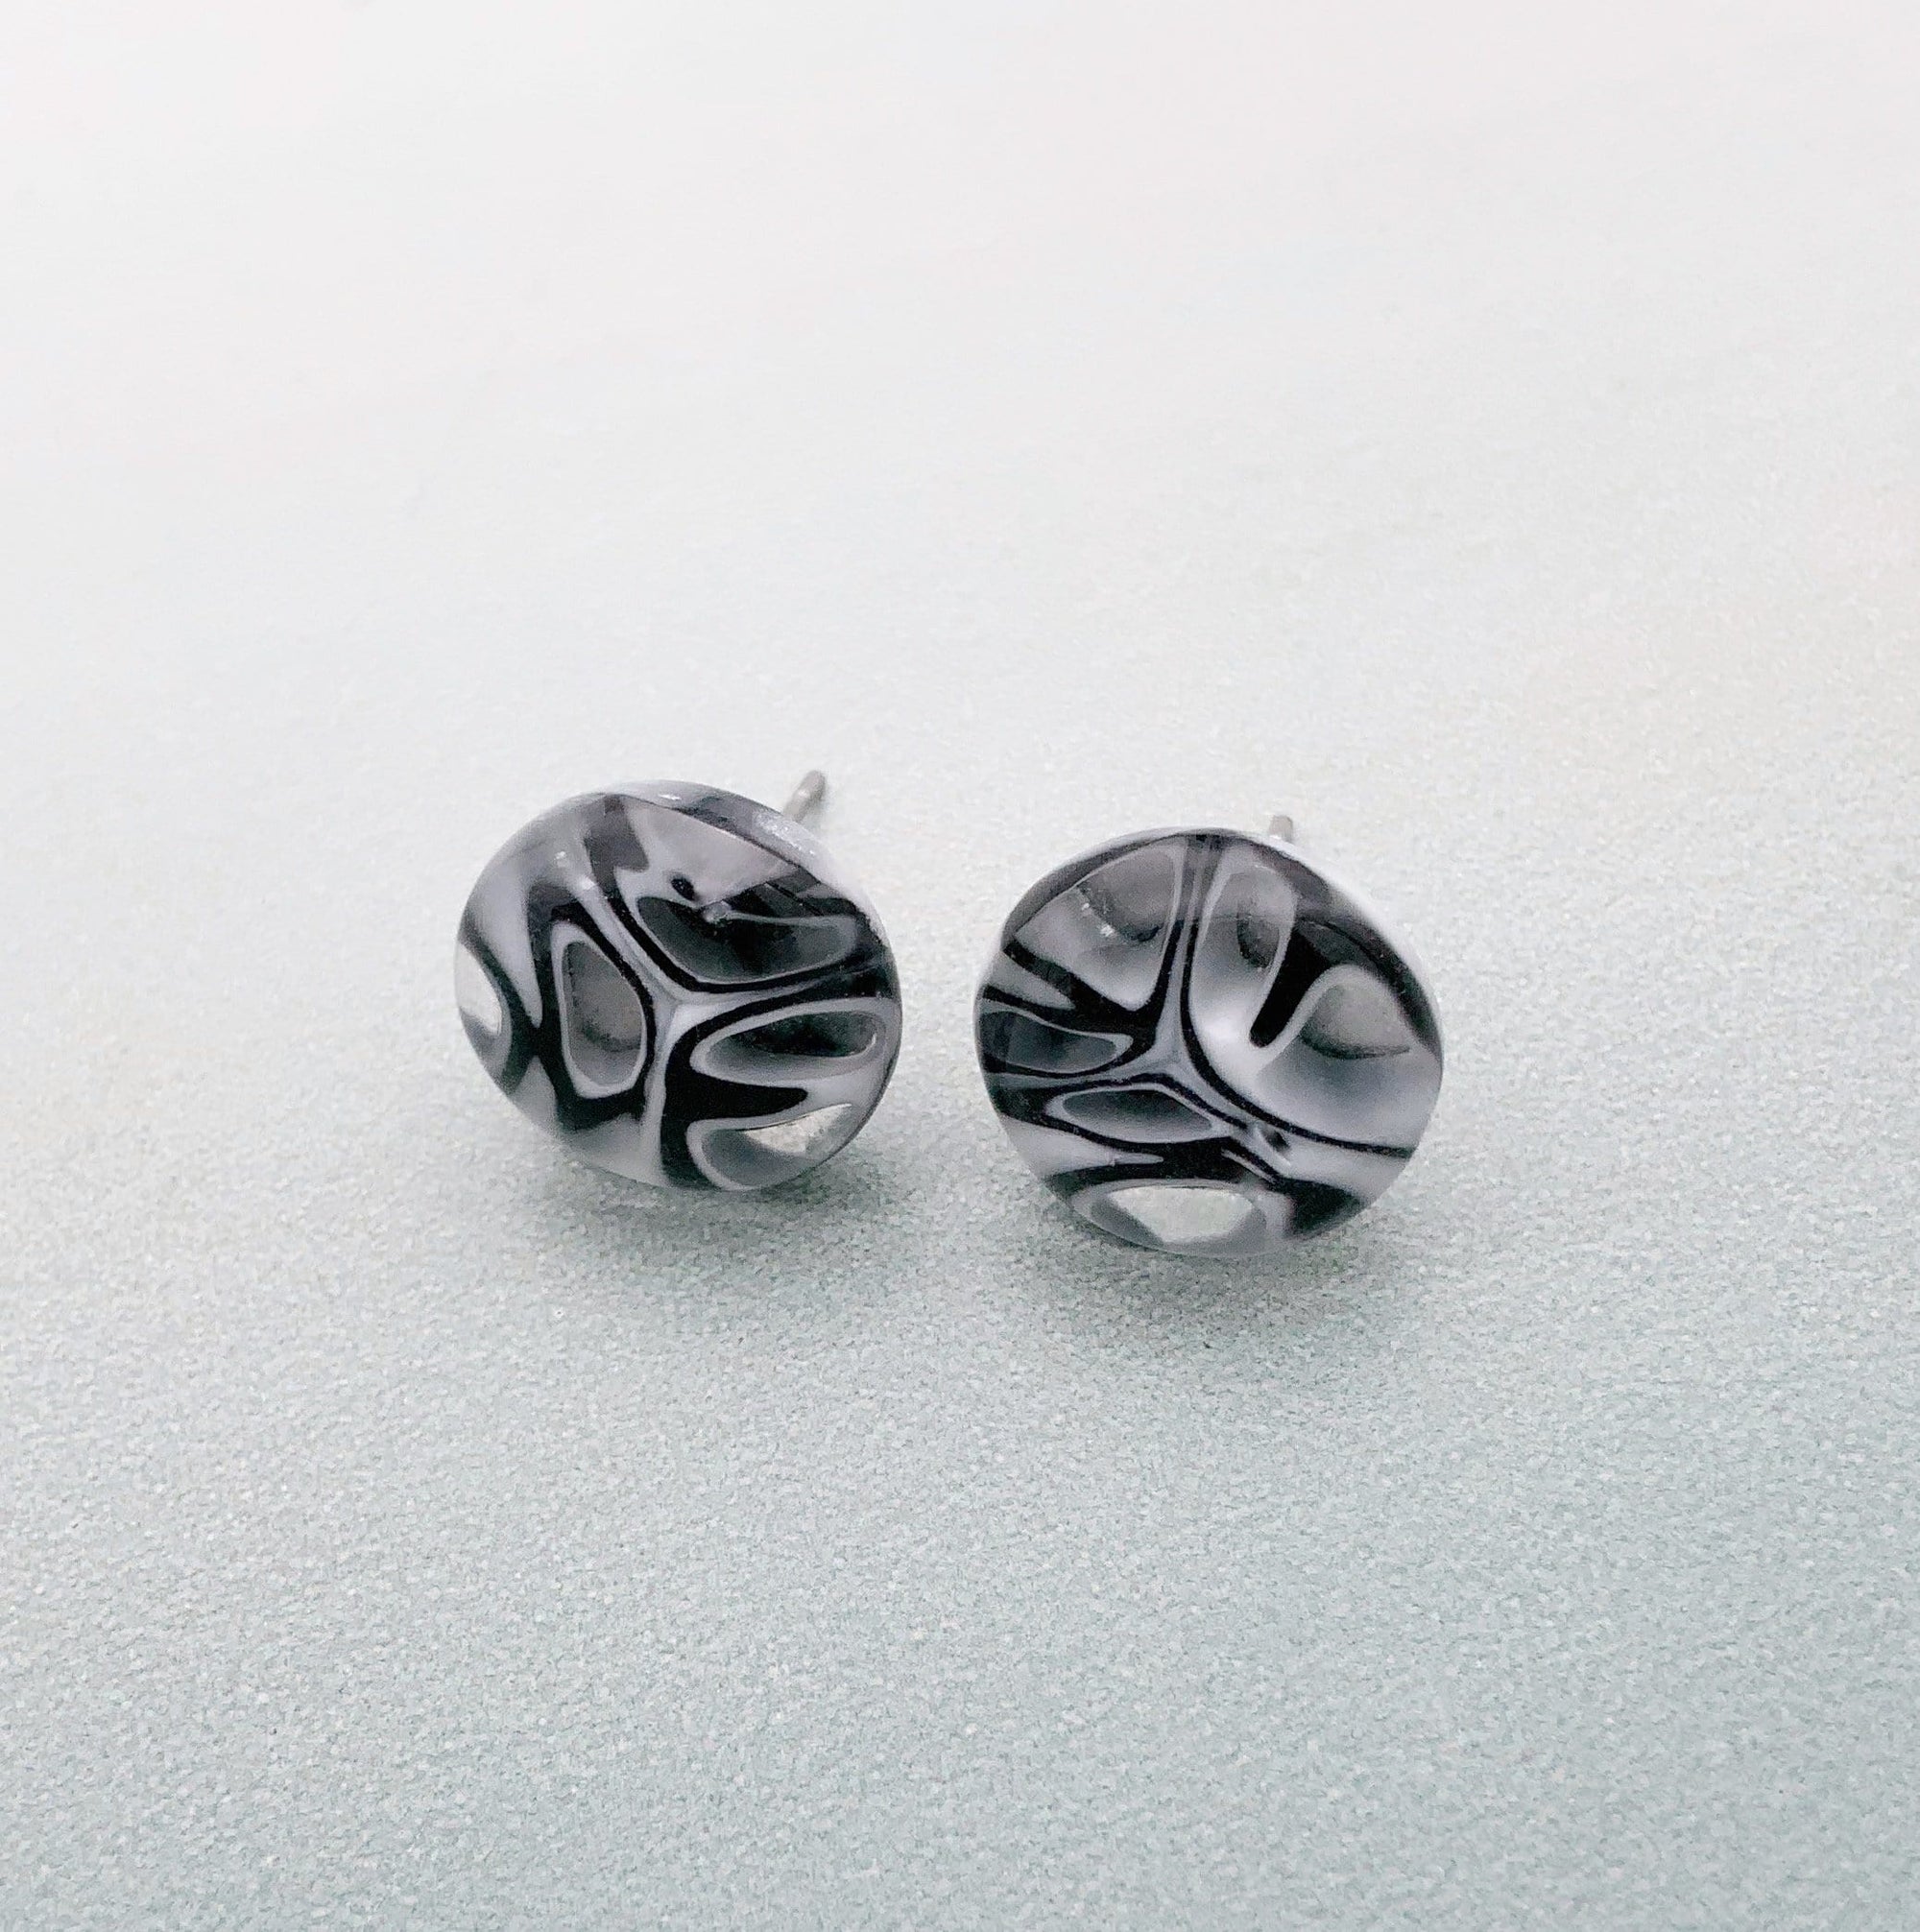 Fused murrini glass black and white  stud earrings